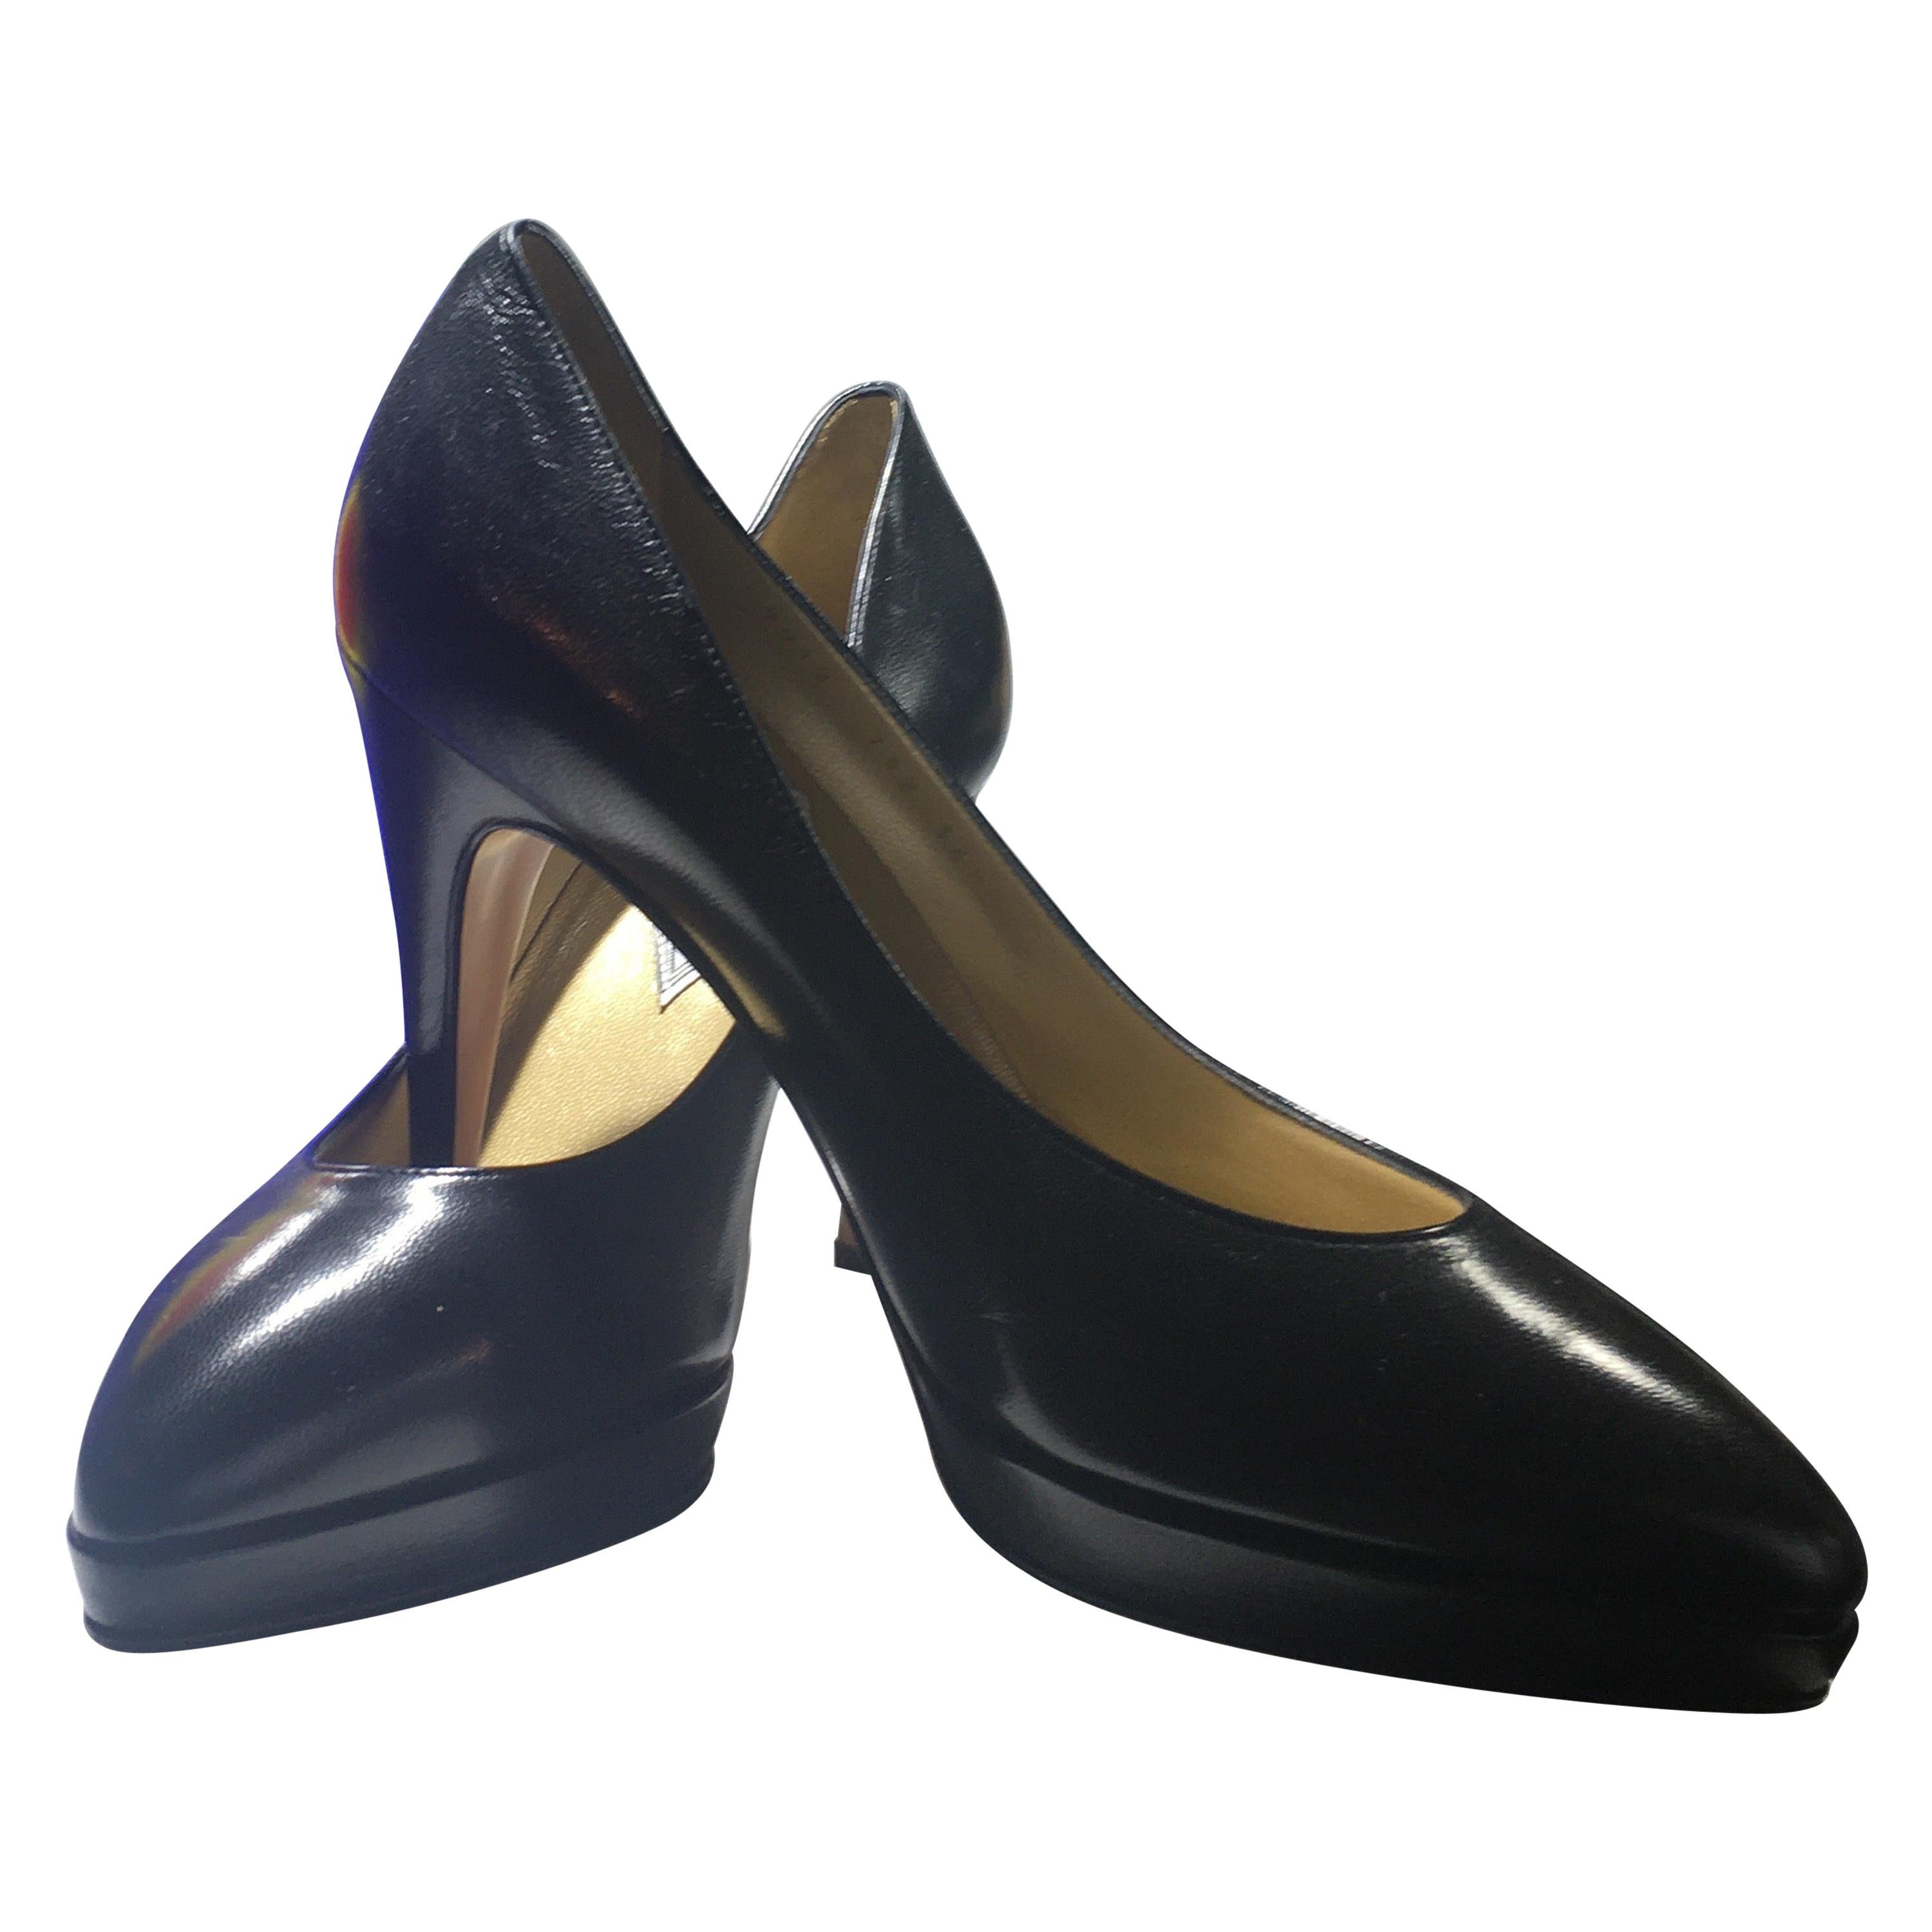 Atelier Versace Black Leather High Heels, Never Worn Size 7